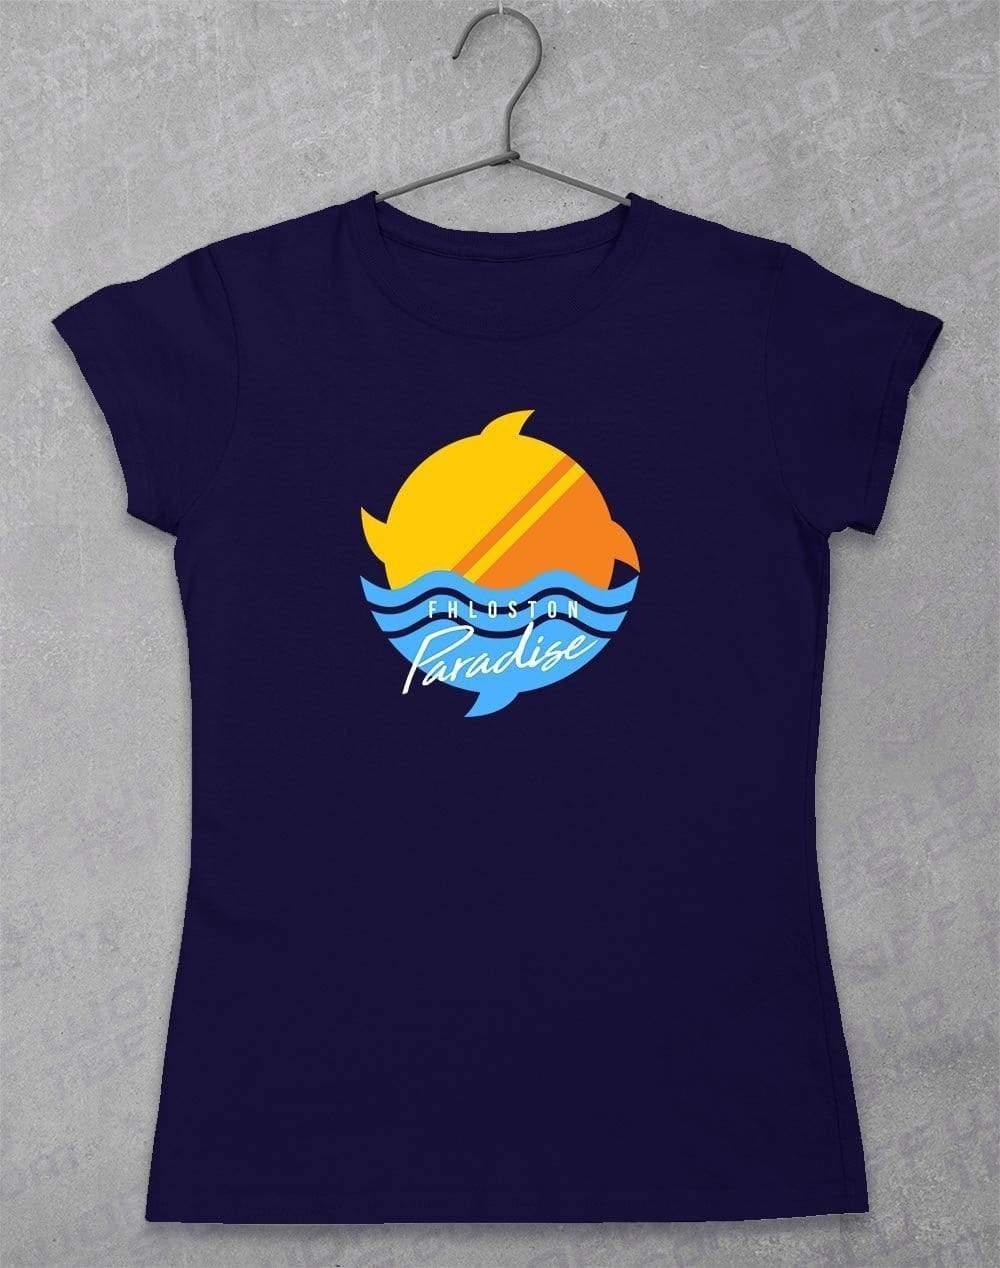 Fhloston Paradise Classic Women's T-Shirt 8-10 / Navy  - Off World Tees